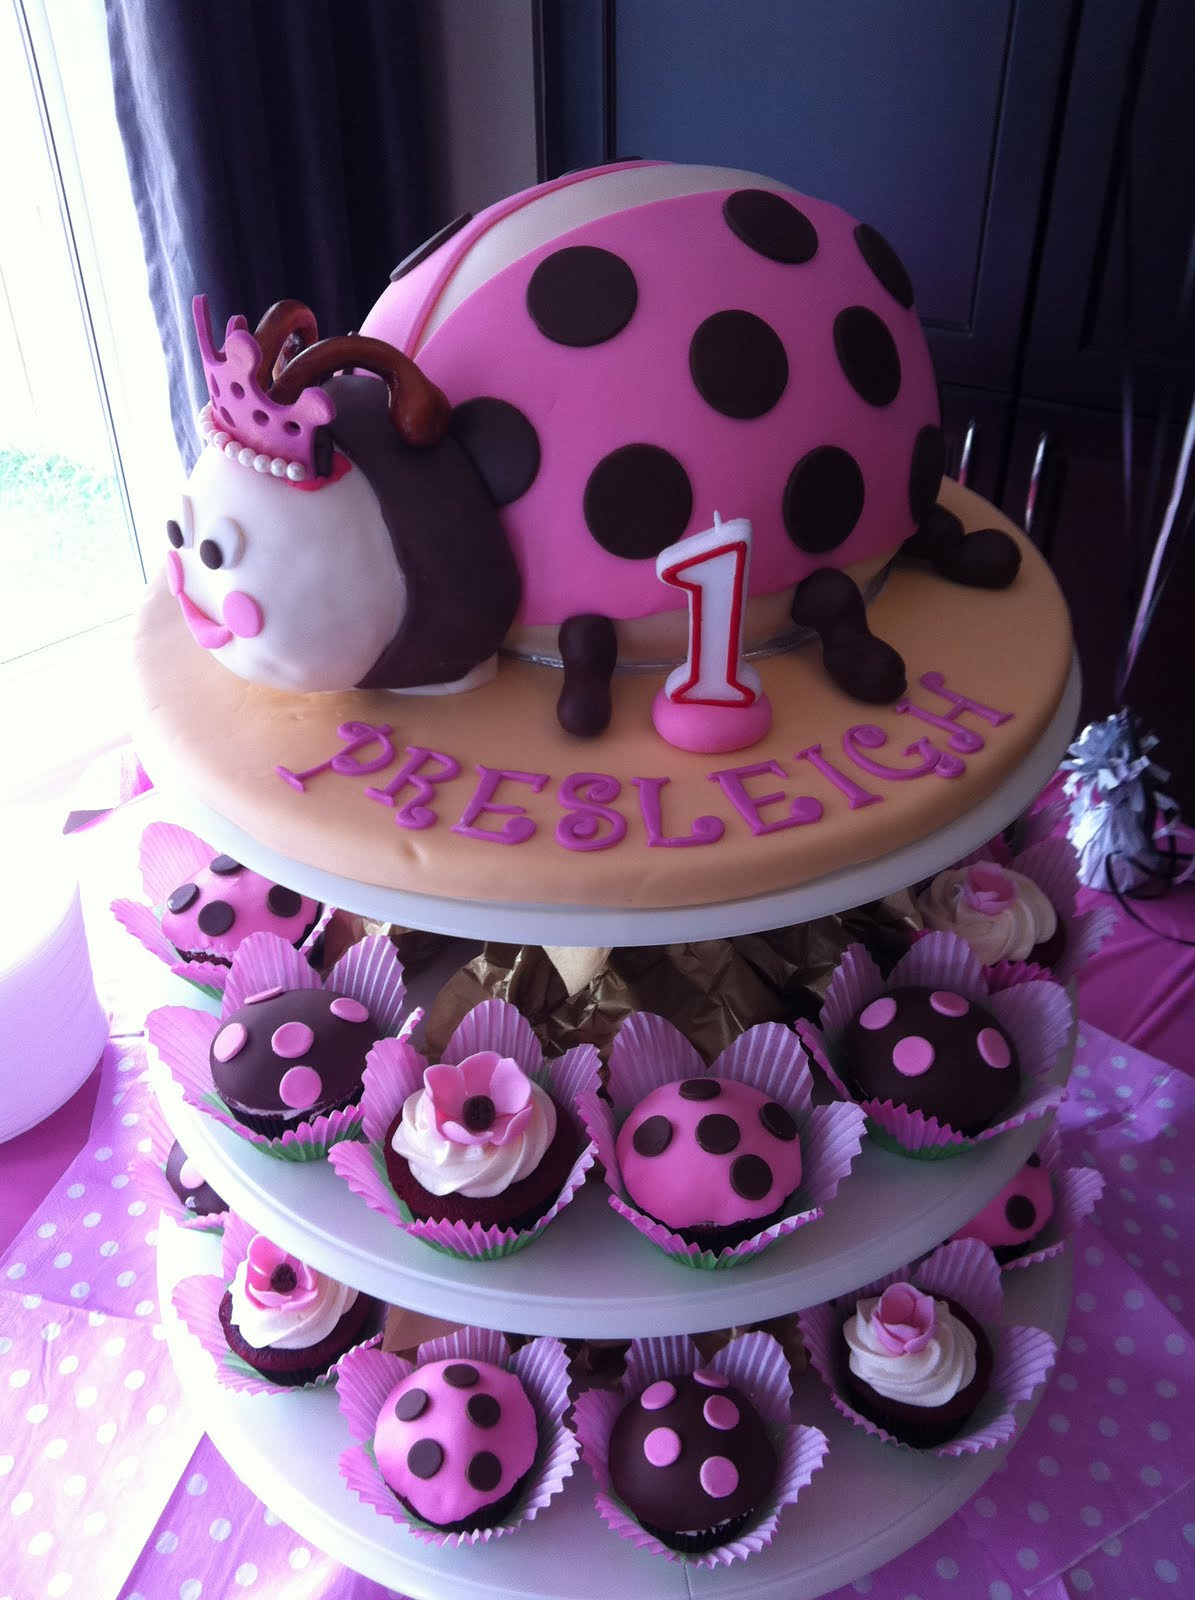 Ladybug Birthday Cakes
 Jocelyn s Wedding Cakes and More Ladybug Cupcakes